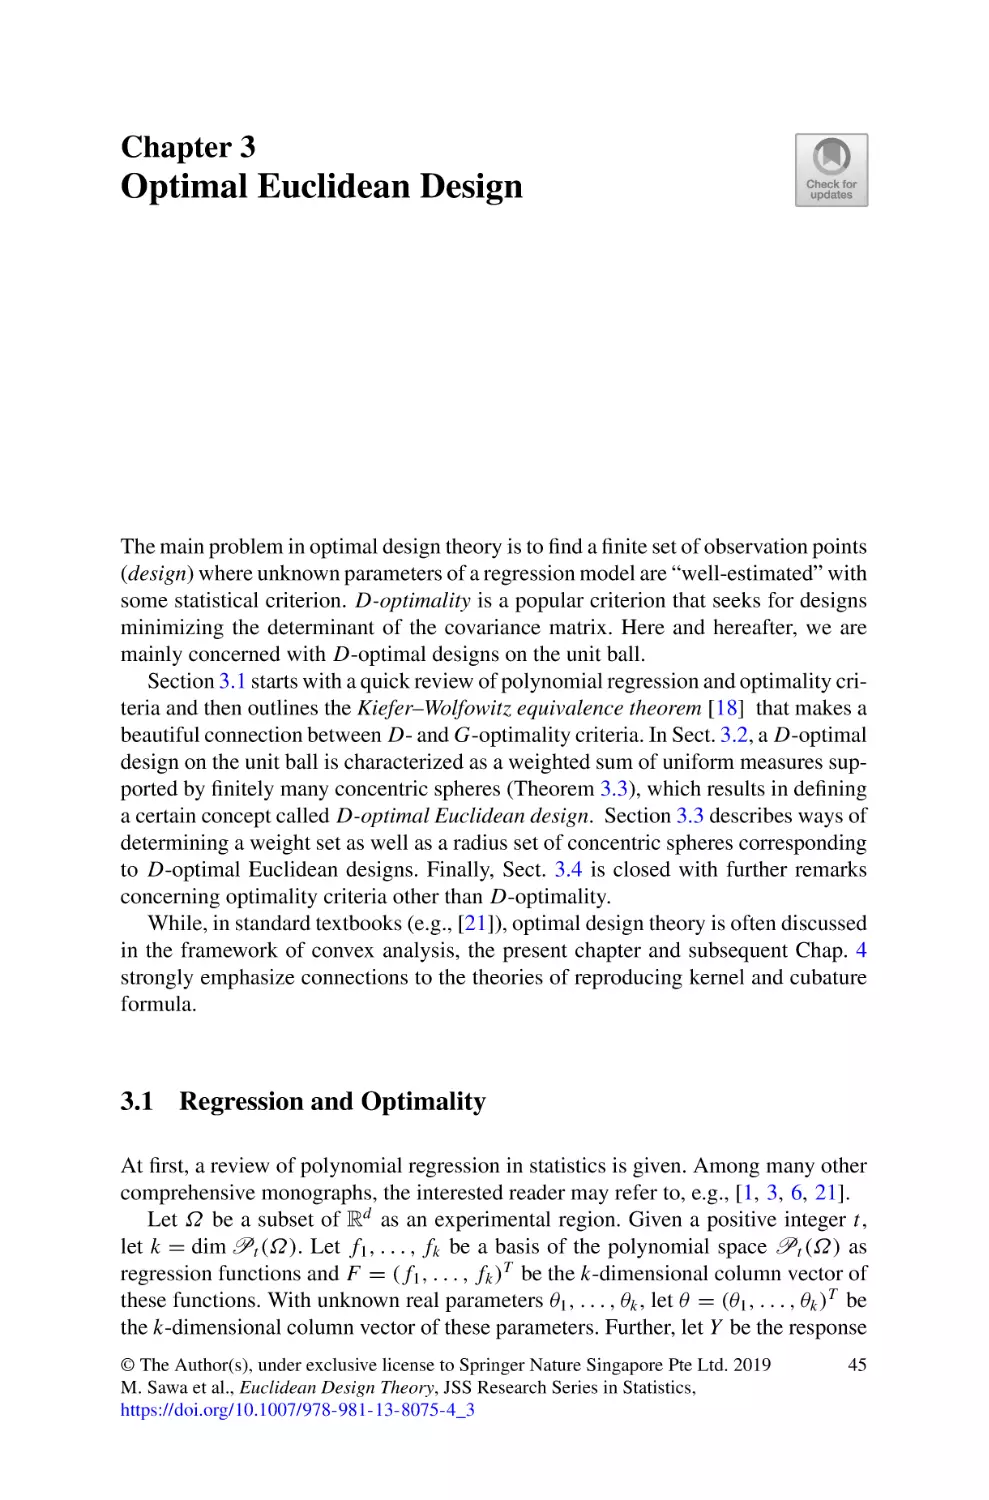 3 Optimal Euclidean Design
3.1 Regression and Optimality